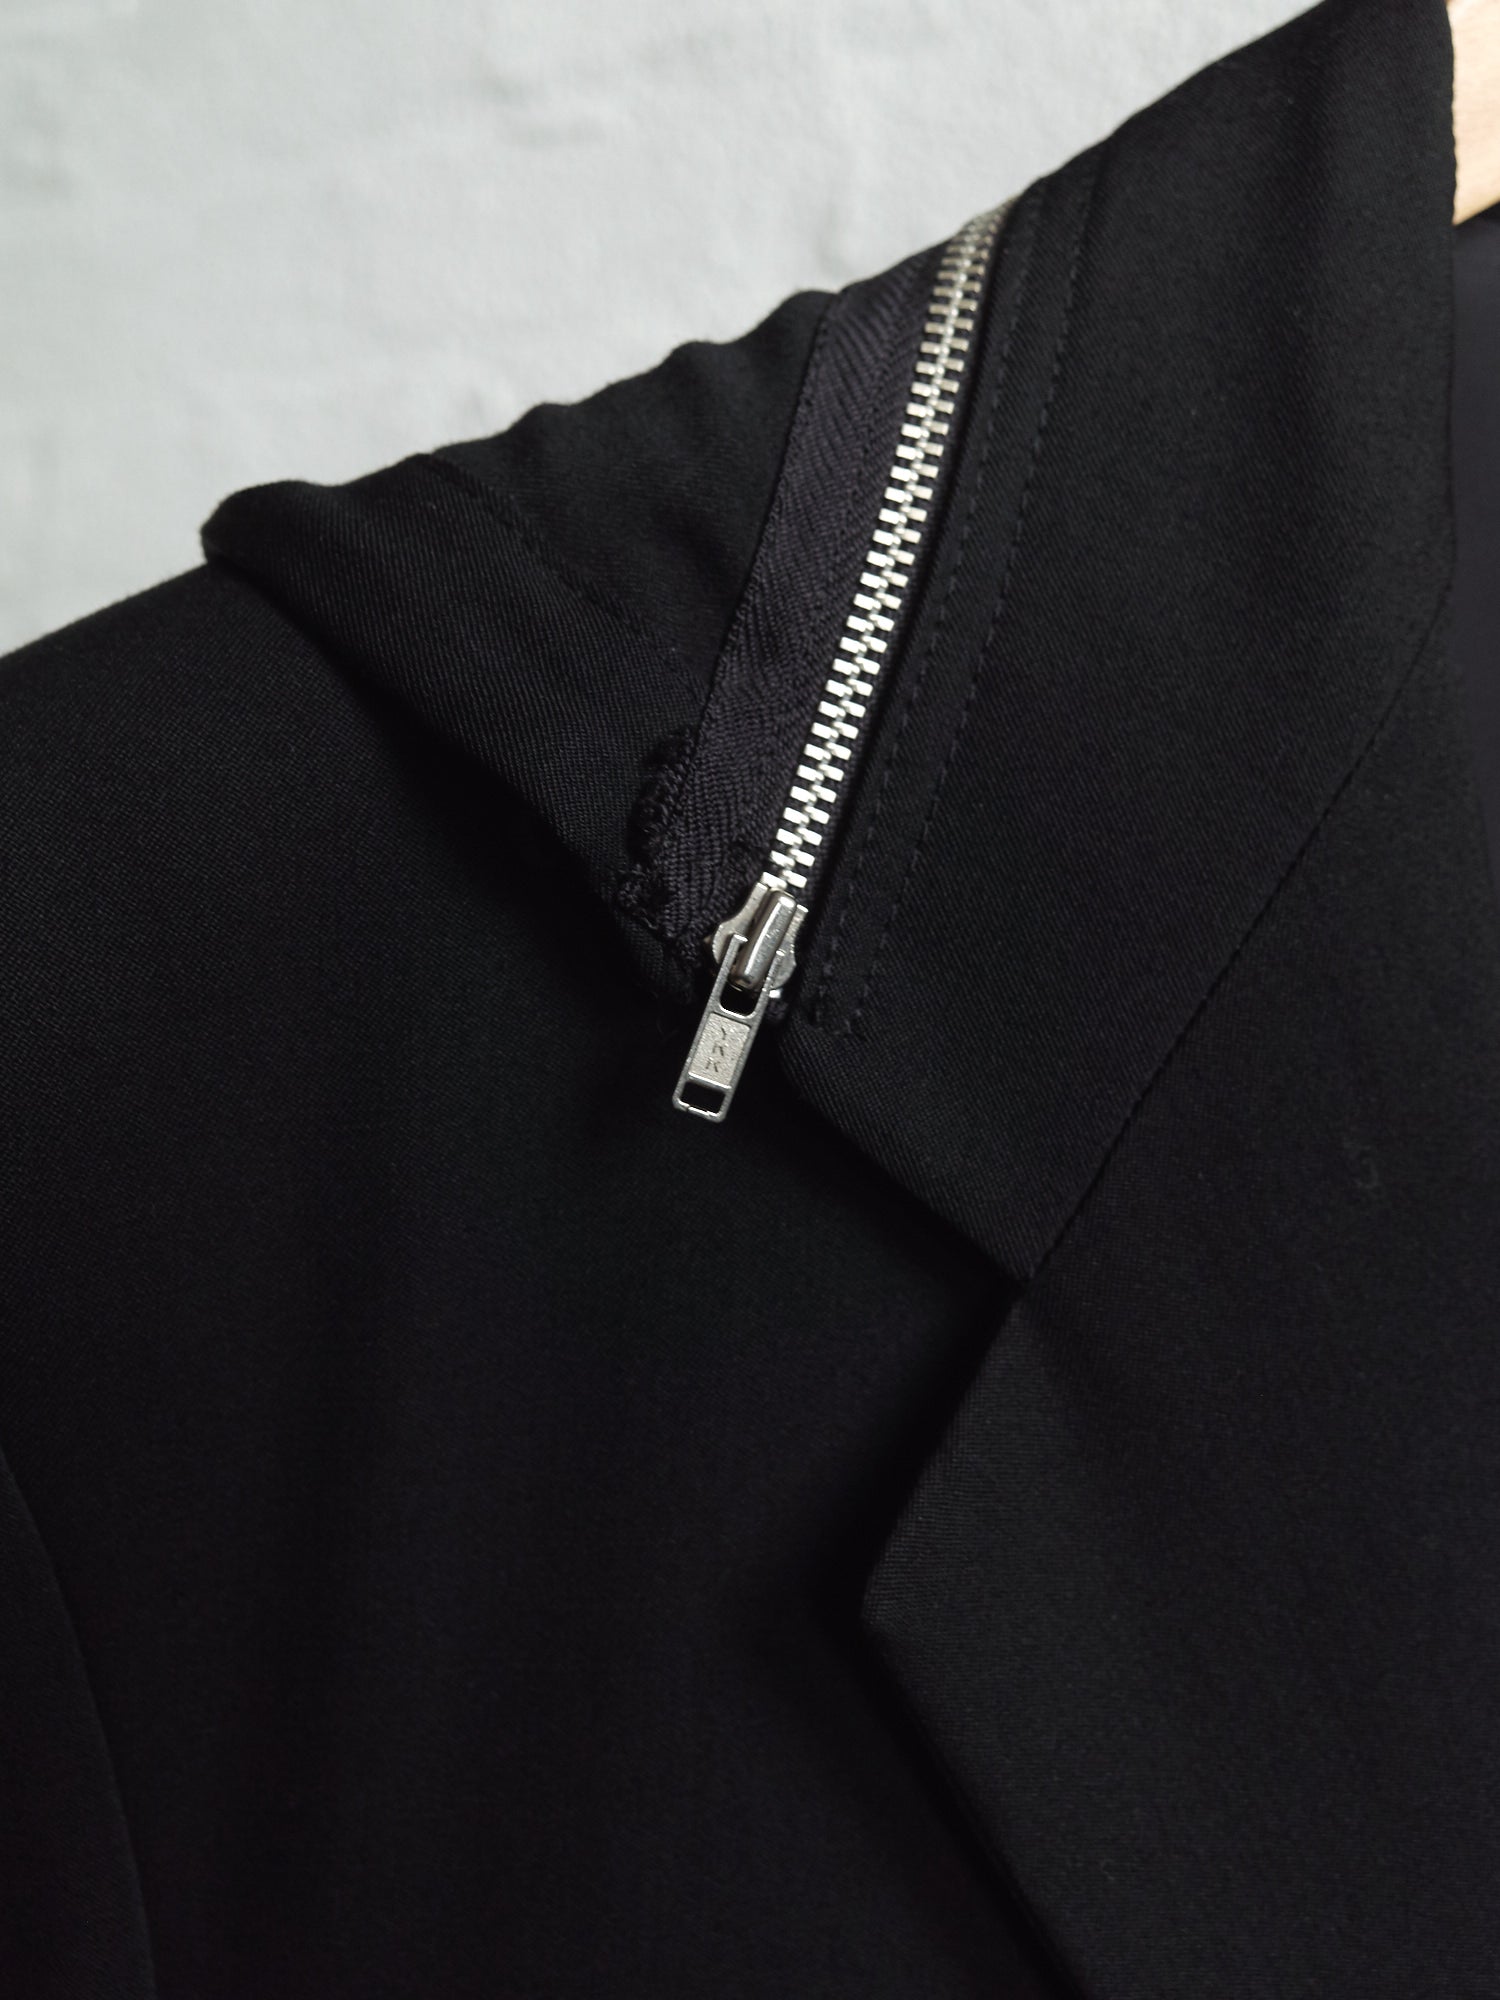 Comme des Garcons Homme 1991 black wool zipped hood three button suit - mens S